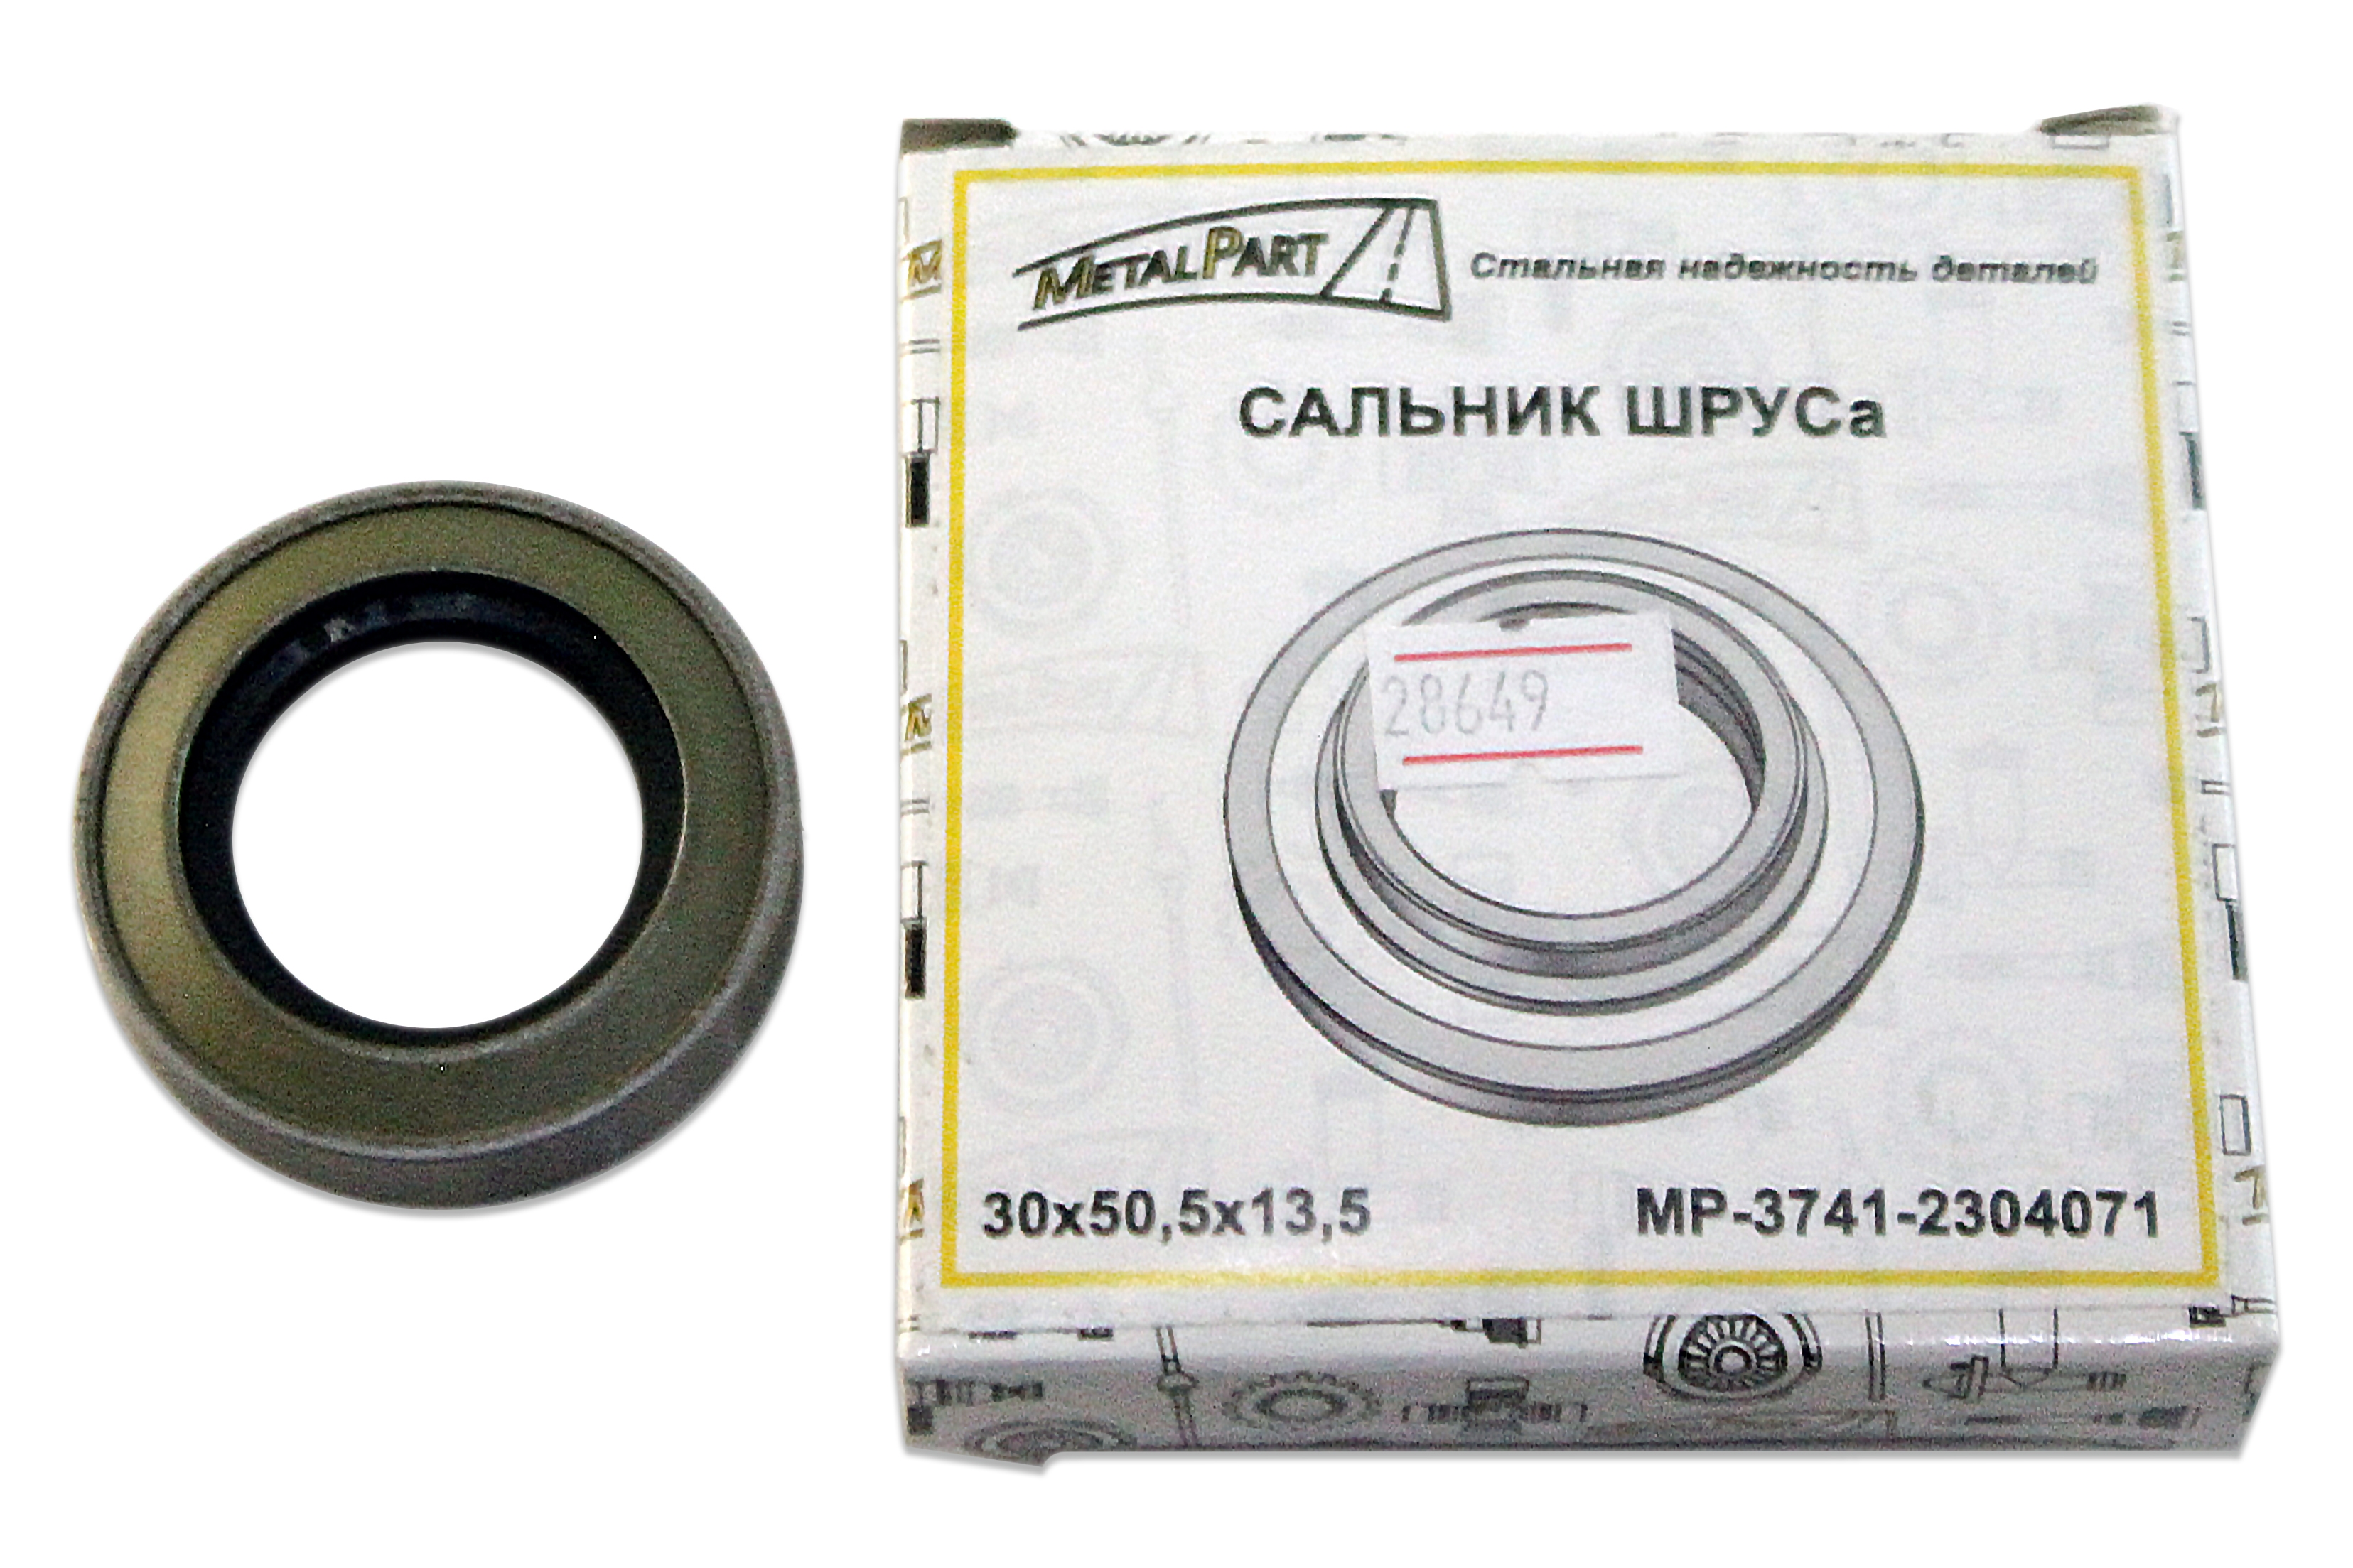 Сальник ШРУСа MetalPart для автомобилей УАЗ  30х50,5х13,5 Материал NBR